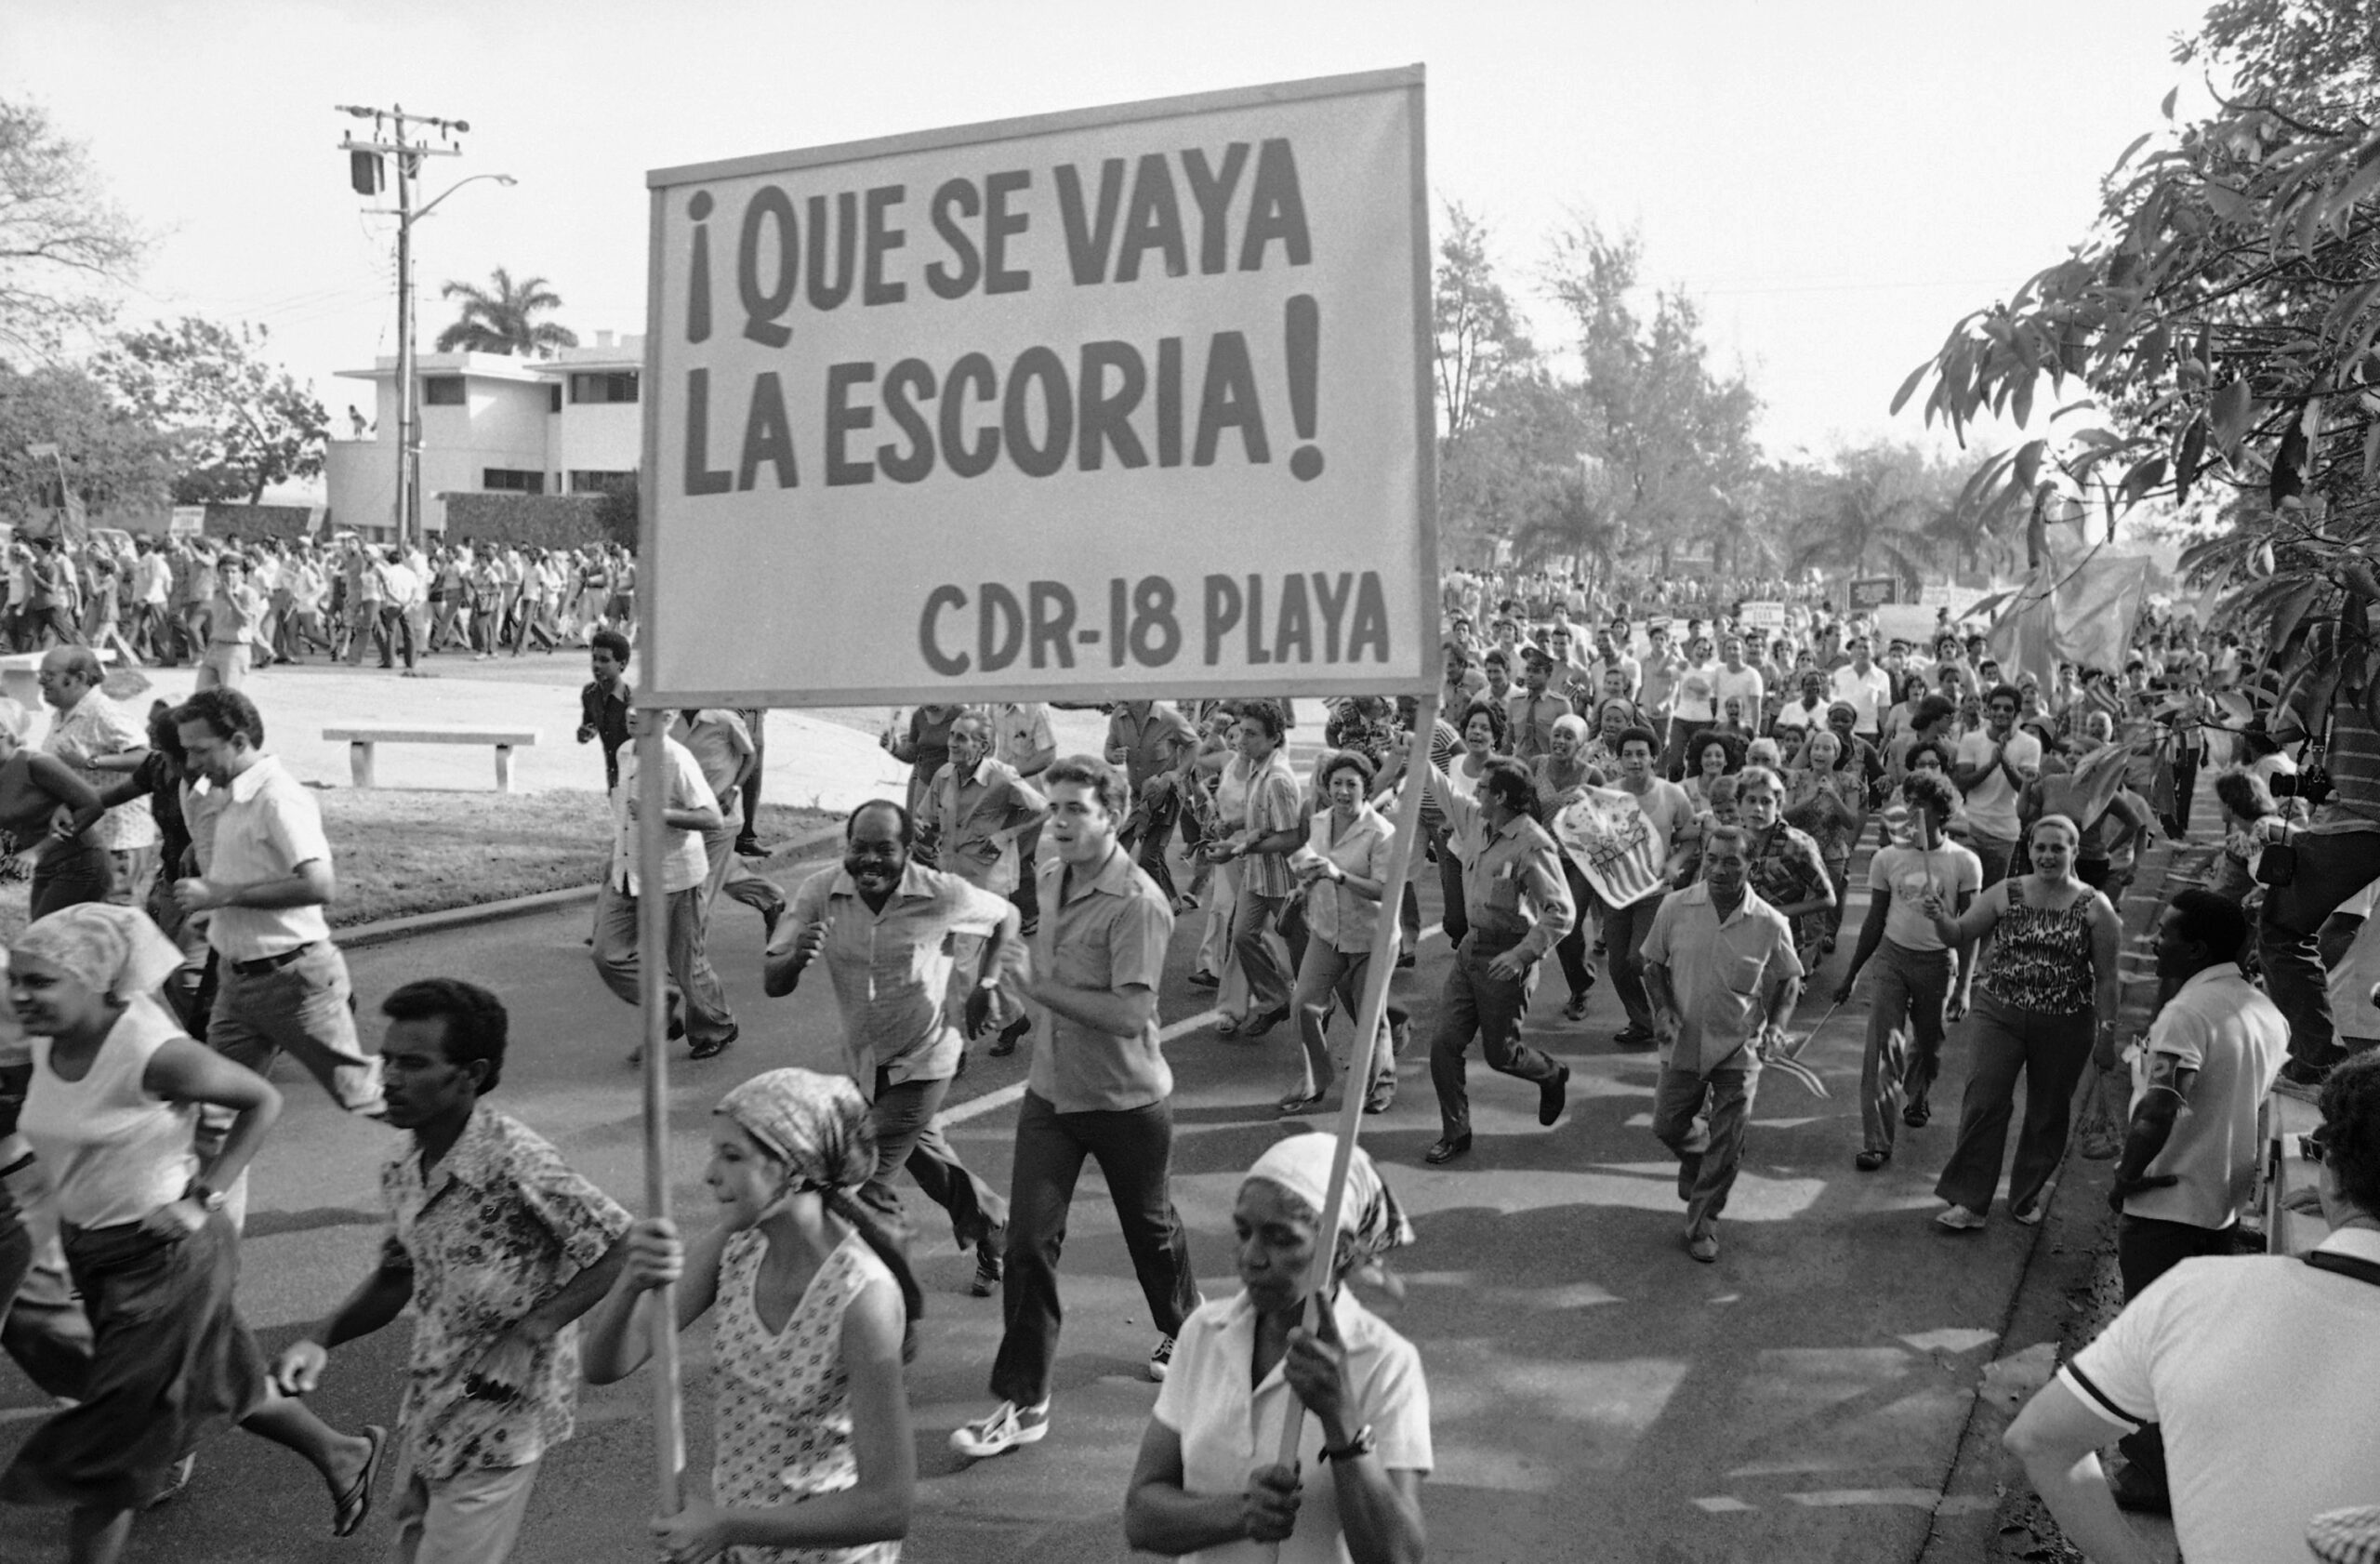 Pro-Castro Cubans carry a banner referring to "la escoria," or undesirables